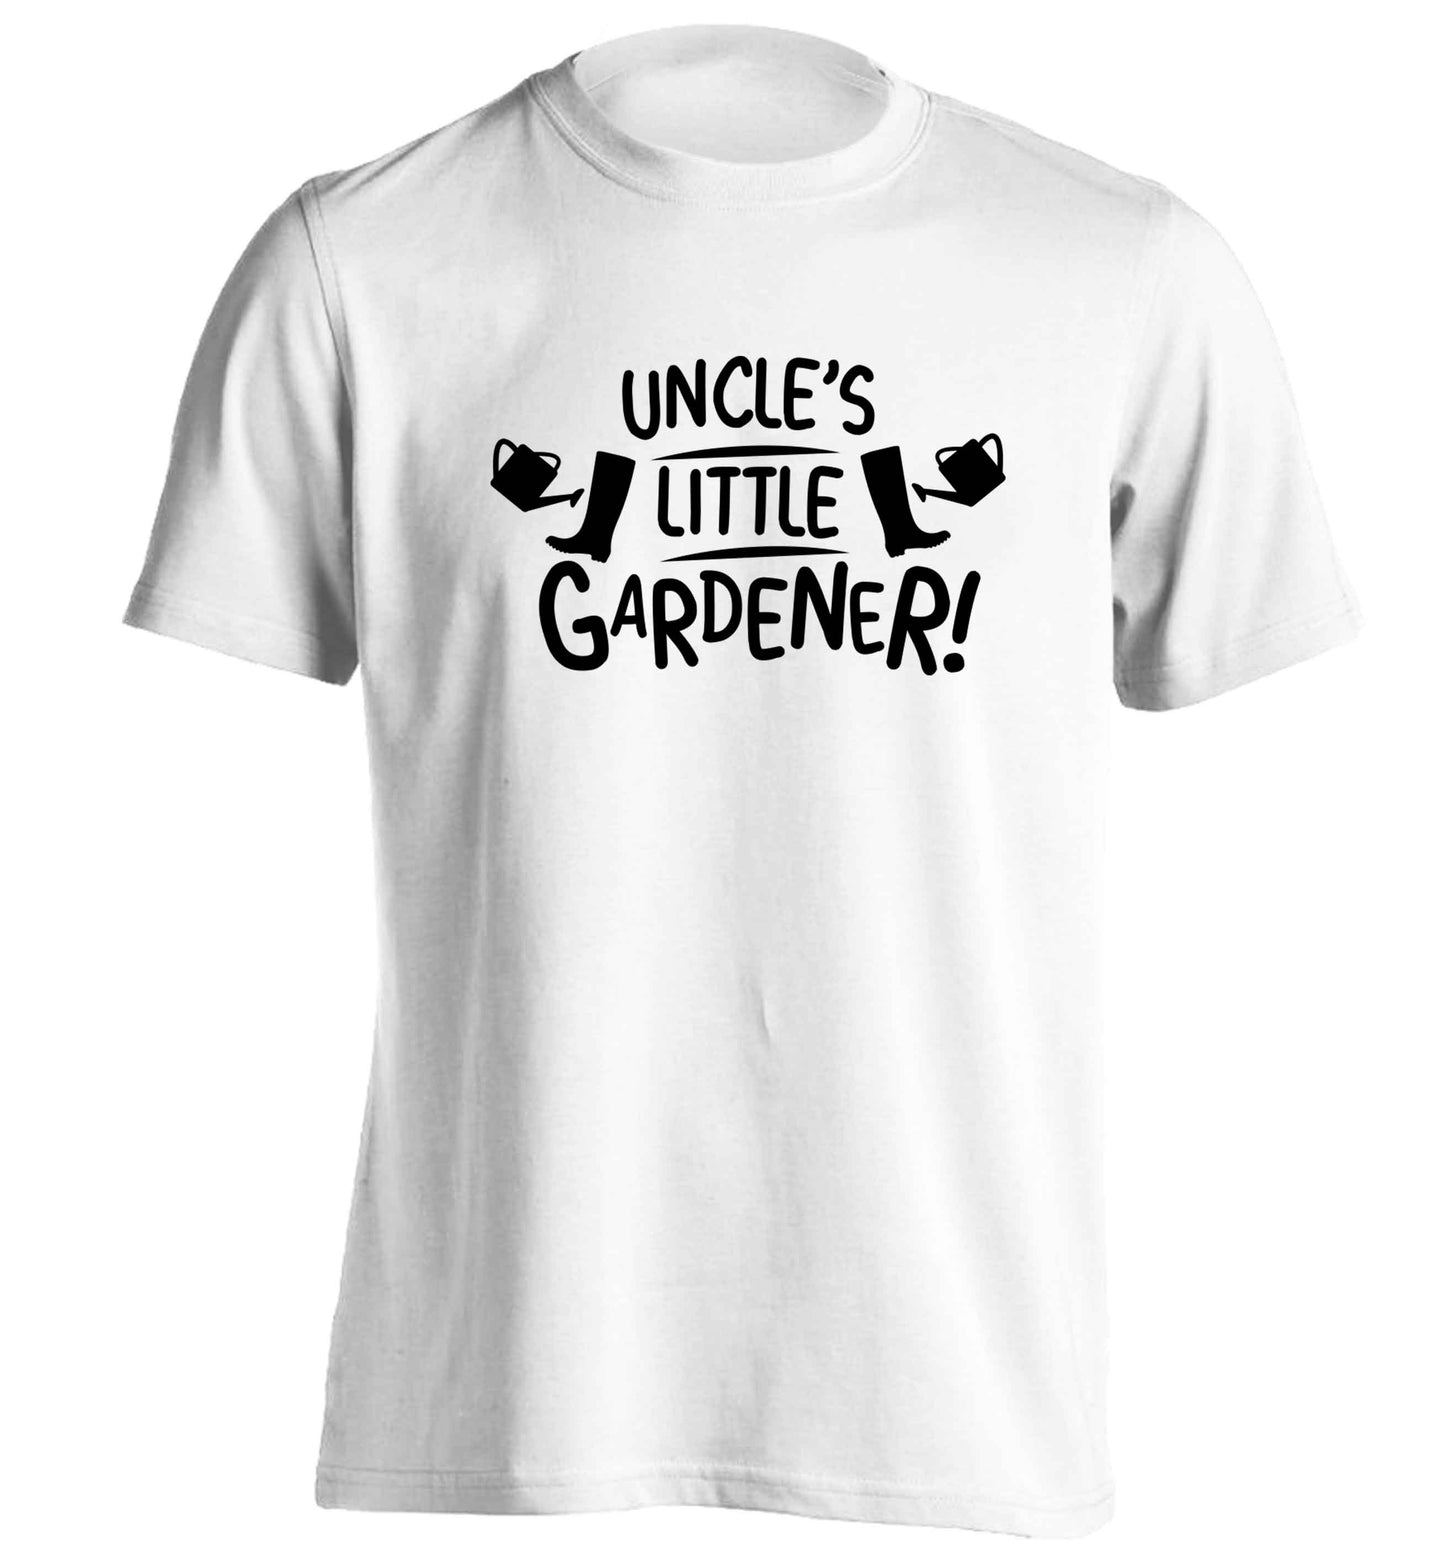 Uncle's little gardener adults unisex white Tshirt 2XL